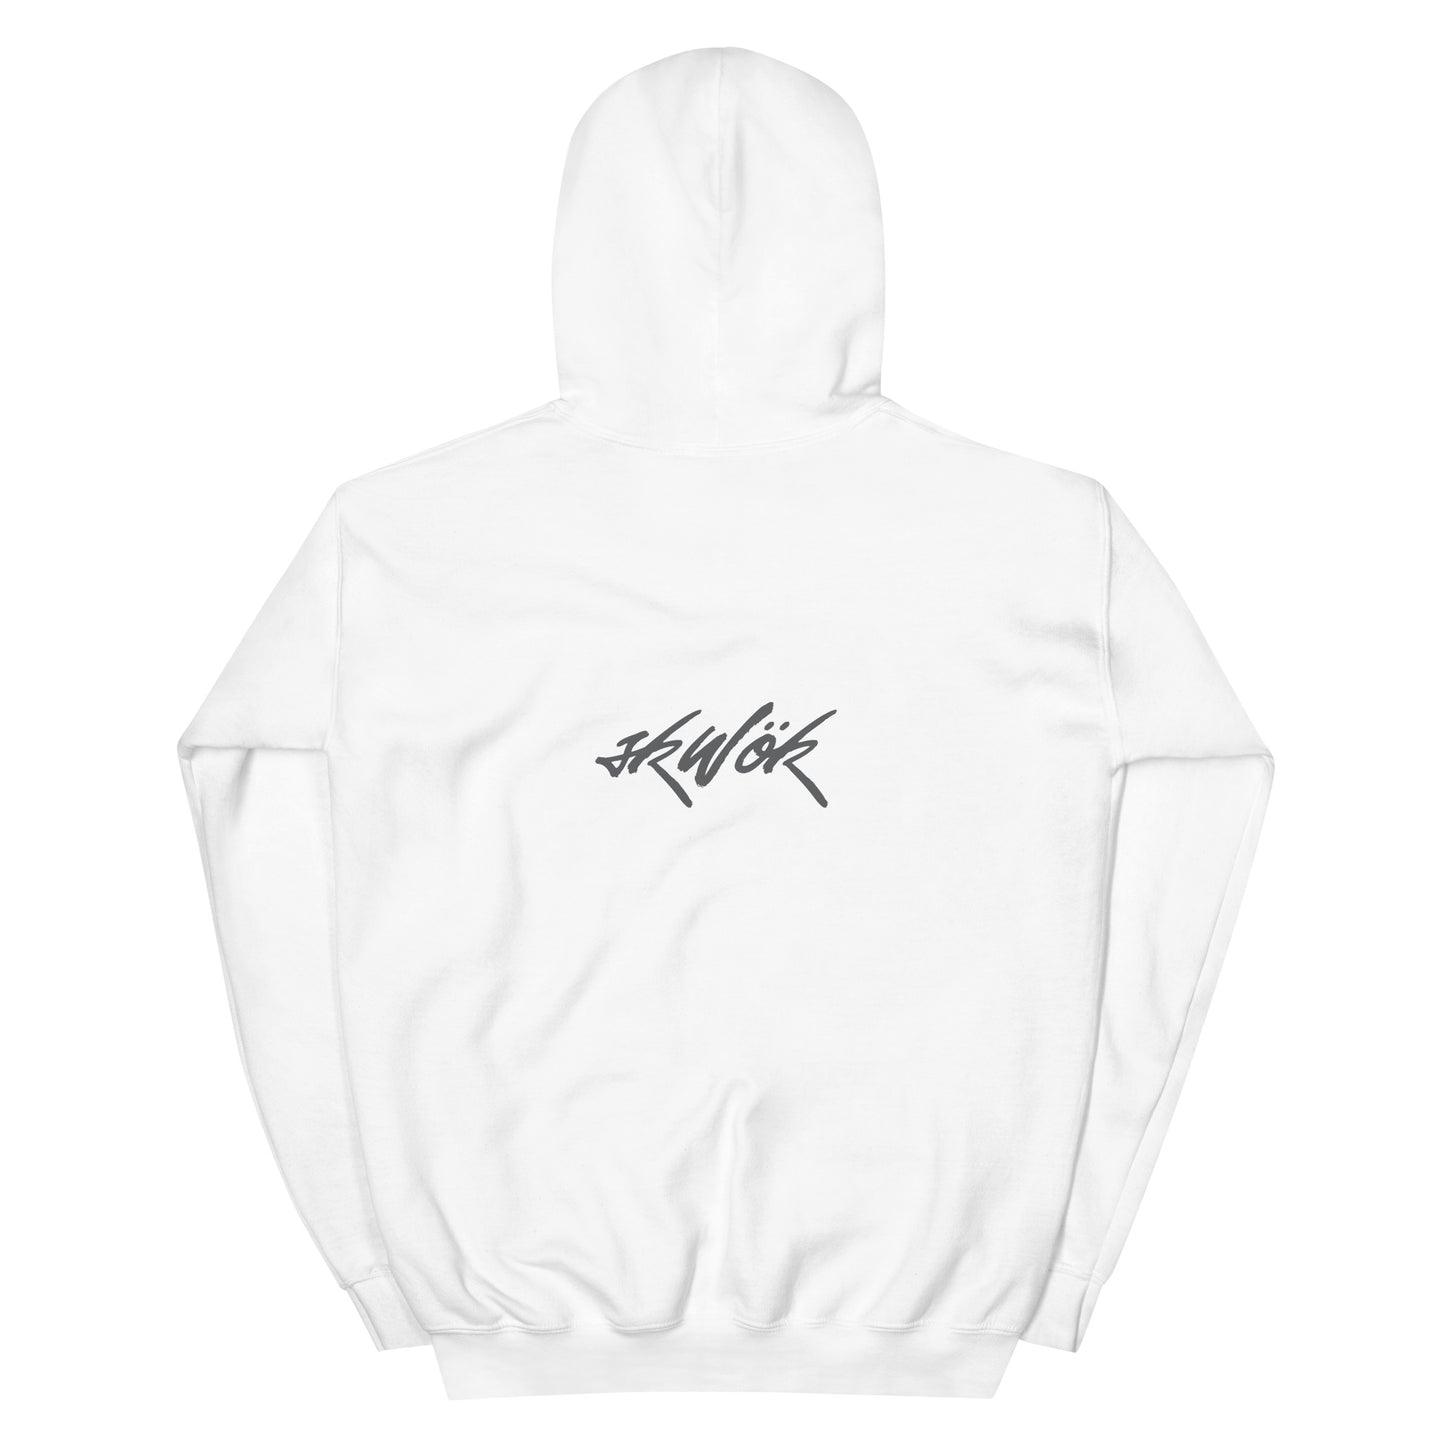 Skwok Brand (04) / Hoodie / Tag Logo / Front - Back